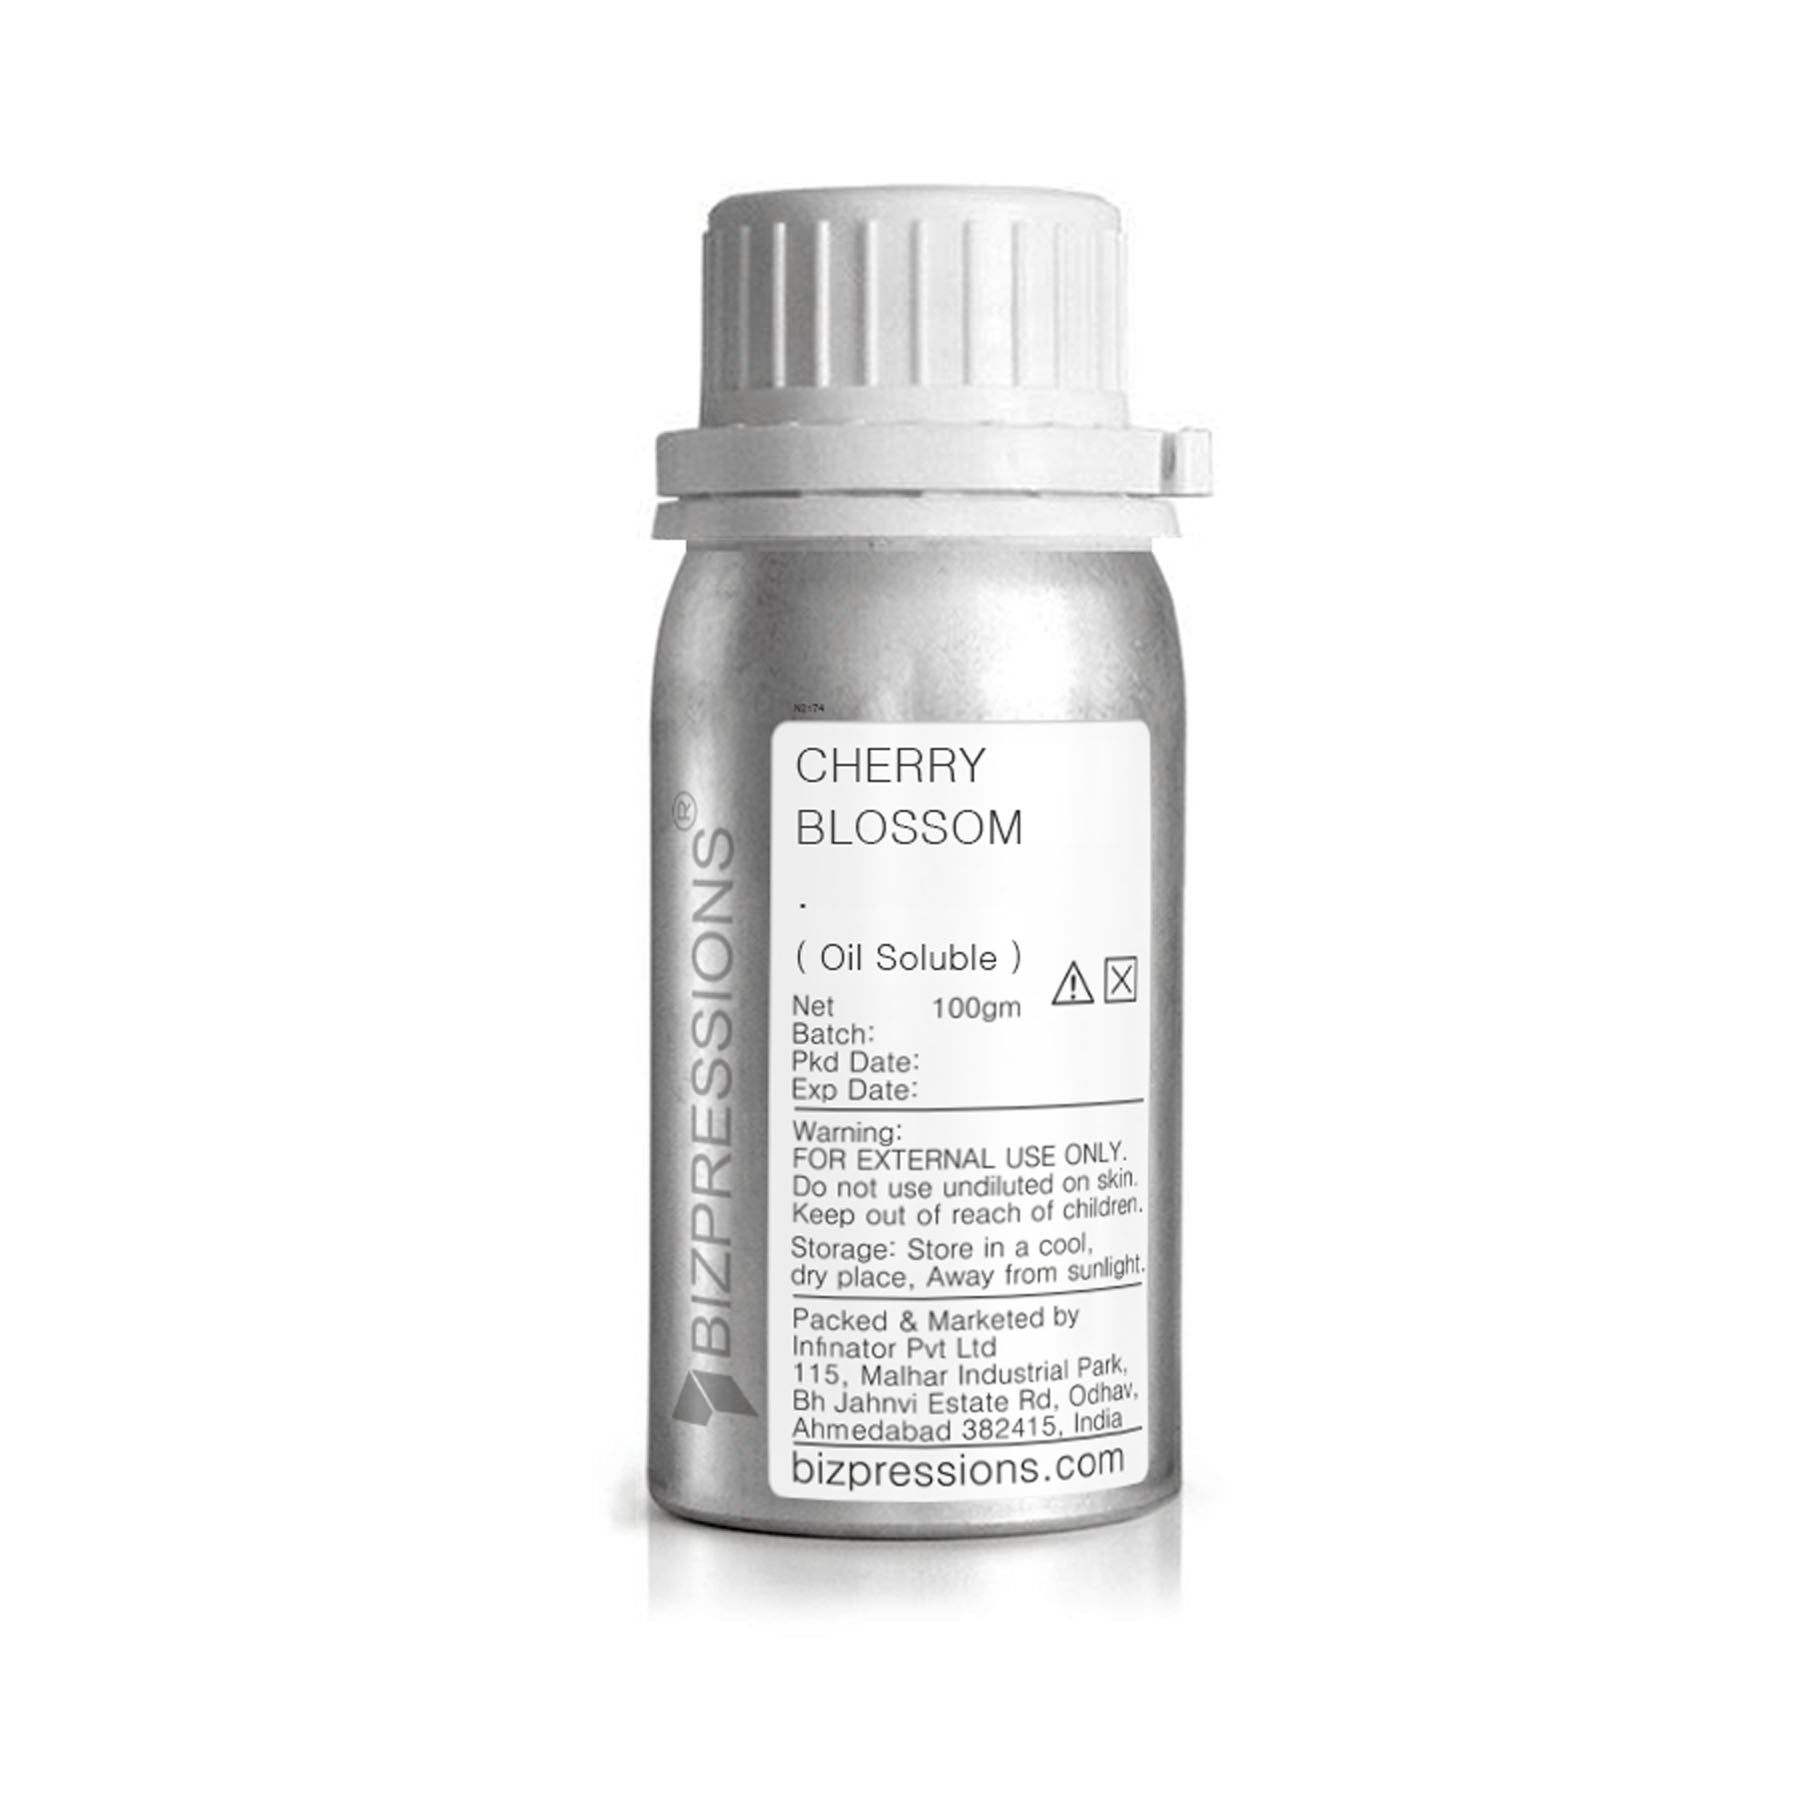 CHERRY BLOSSOM - Fragrance ( Oil Soluble ) - 100 gm